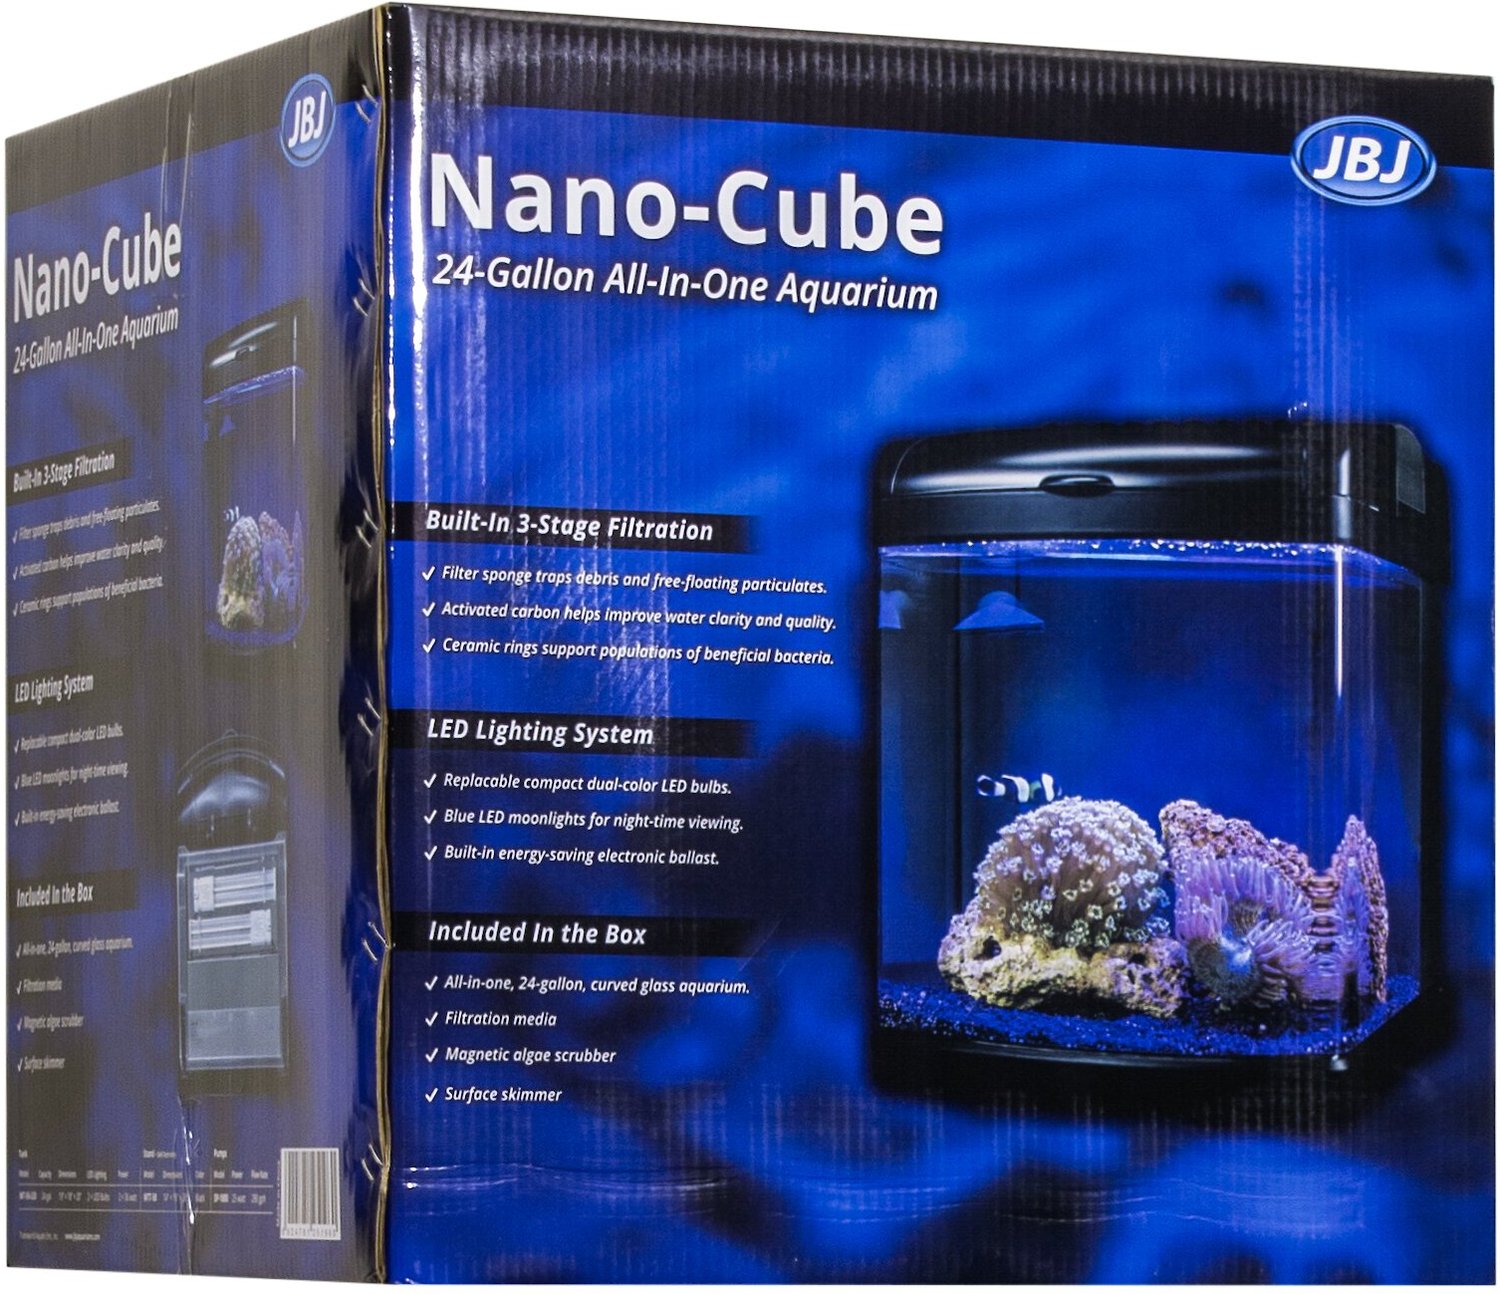 Vleien orkest Afwijking JBJ AQUARIUM Nano-Cube DX LED Curved Glass Fish Aquarium, 24-gal - Chewy.com